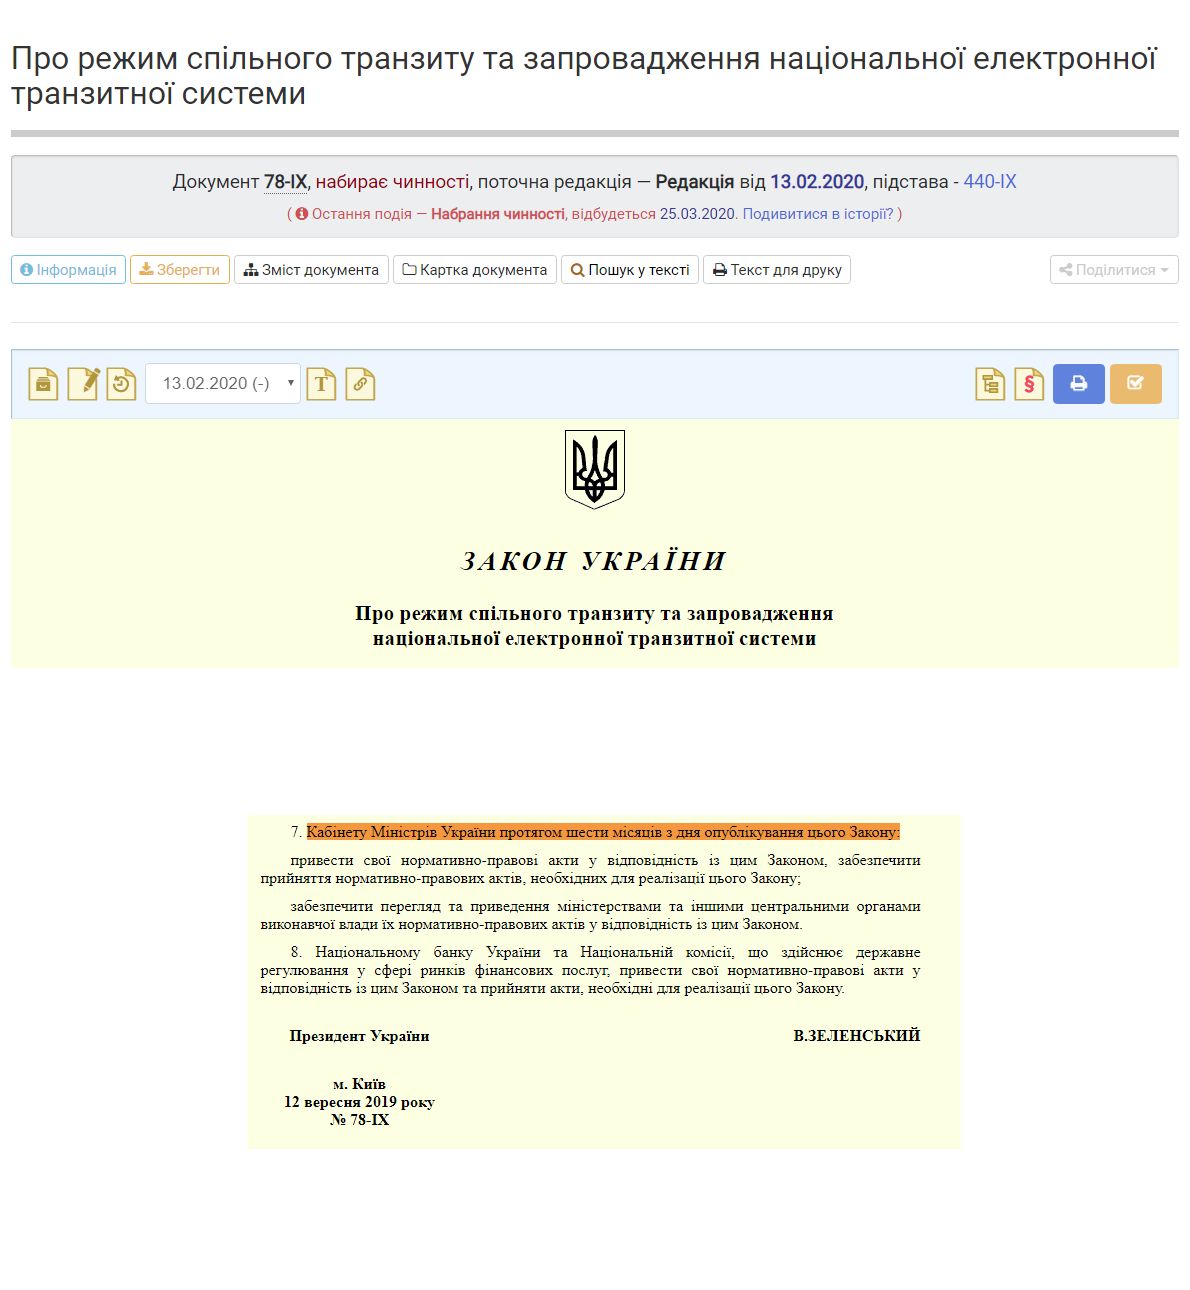 https://zakon.rada.gov.ua/laws/main/78-IX